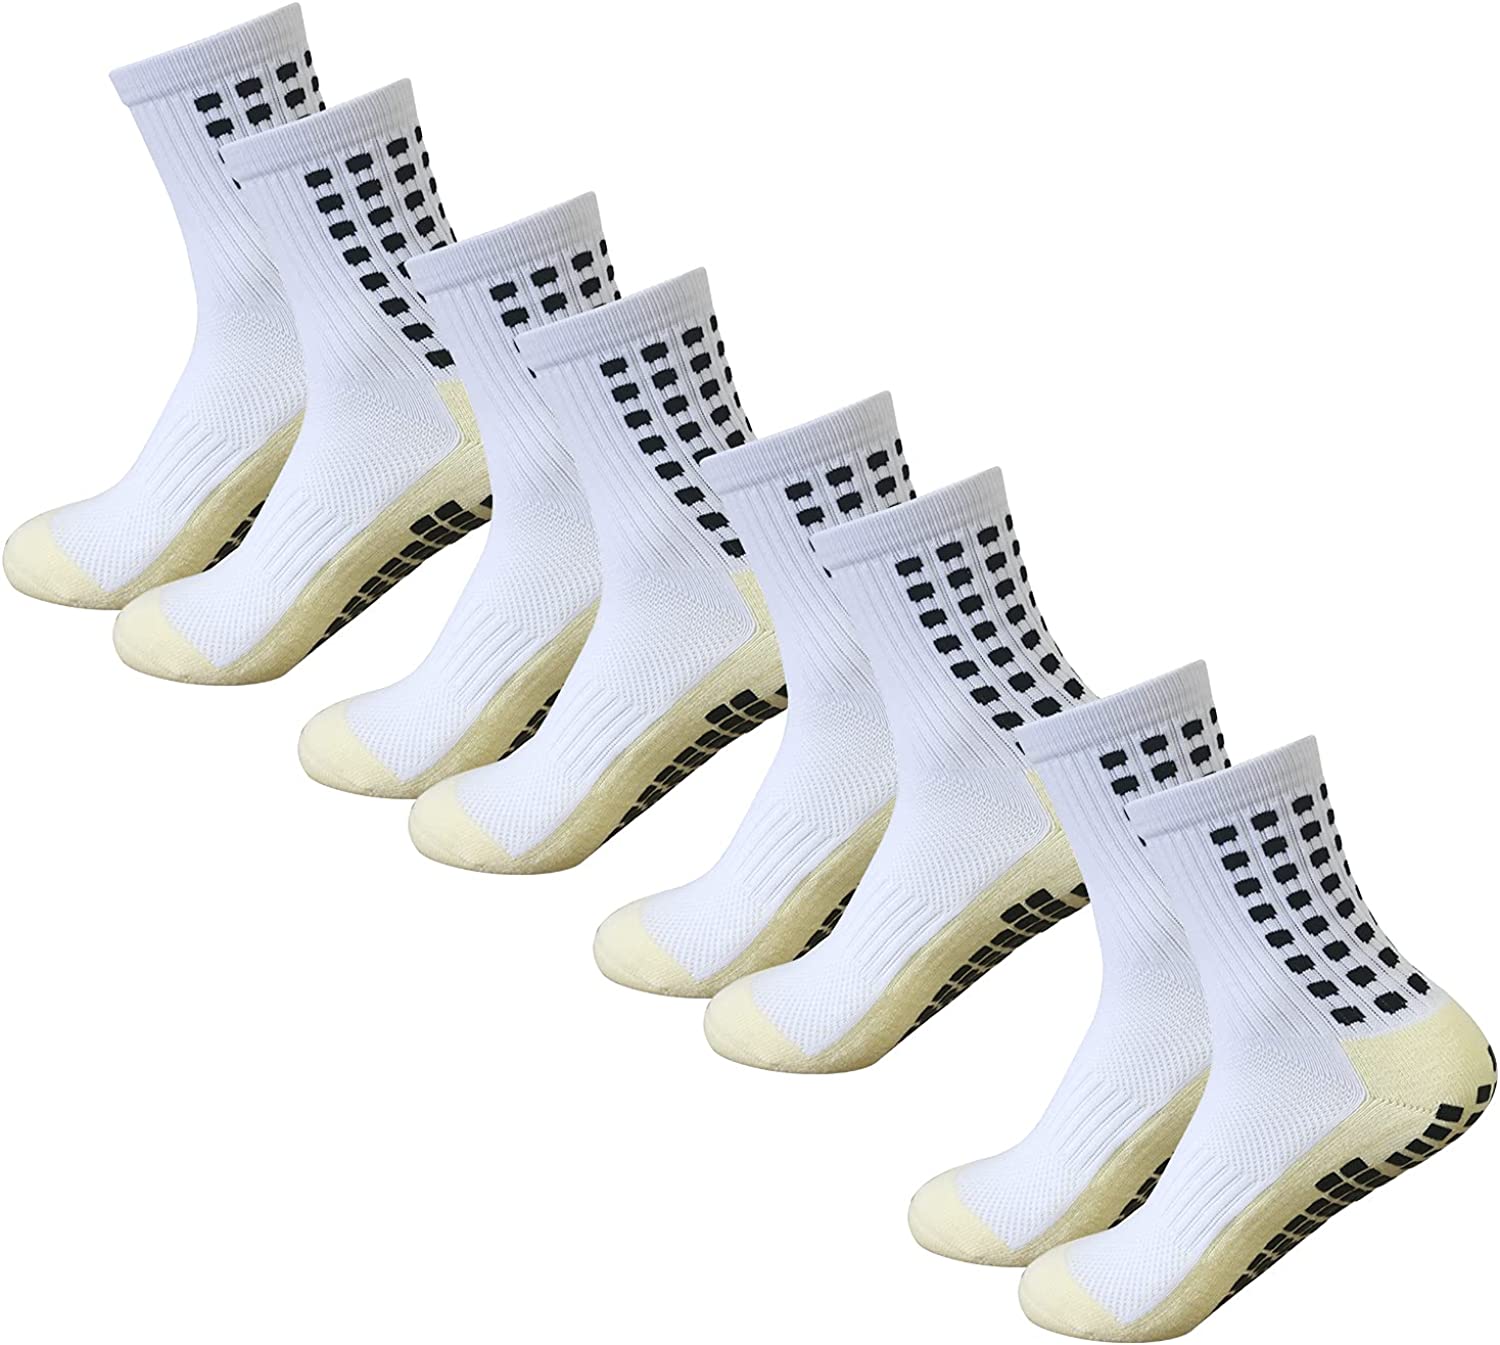 Black Grip Socks for Water Sports - Anti-Slip 